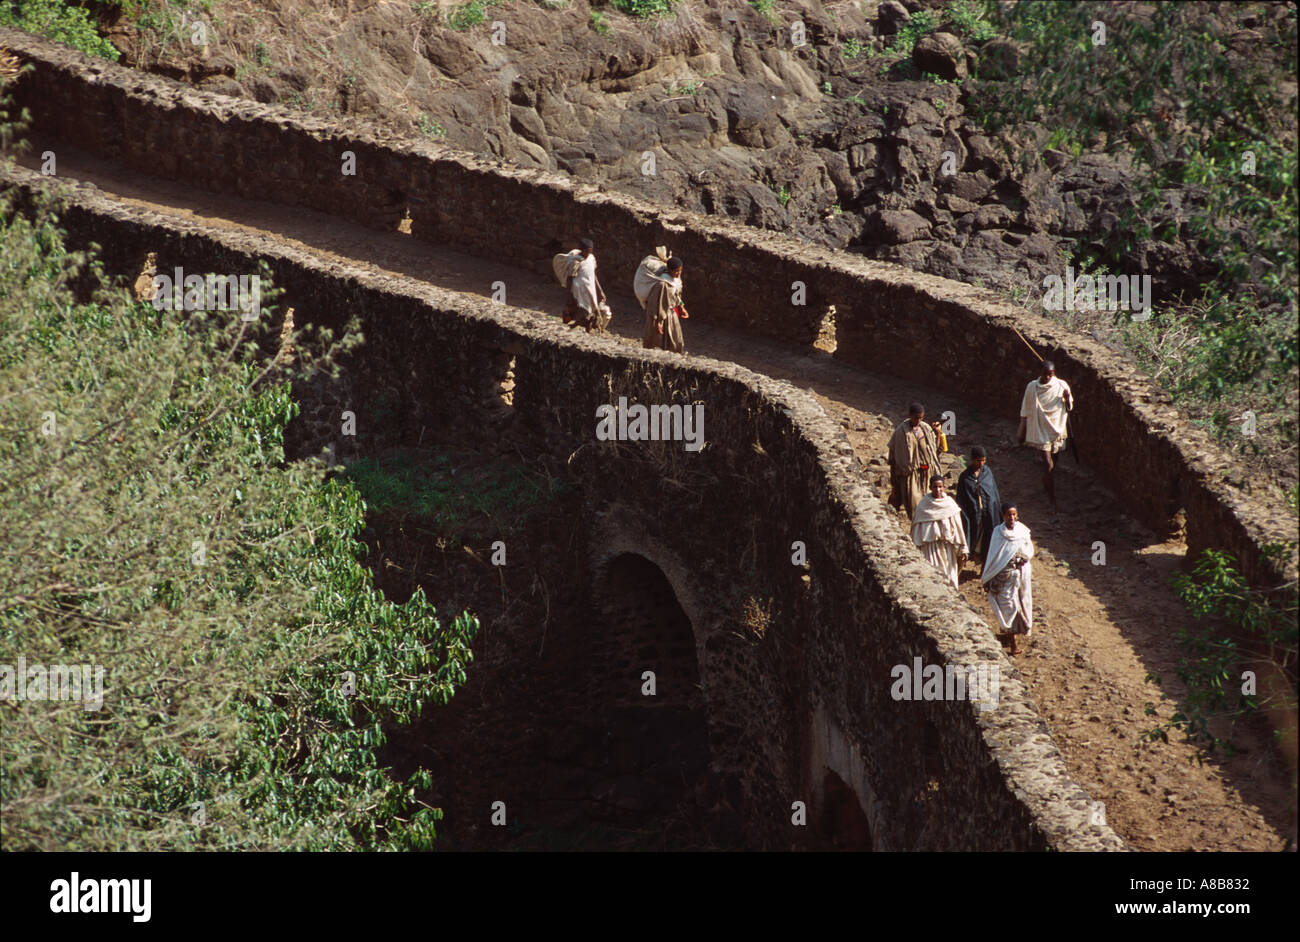 People in traditional dress crossing the Portuguese bridge near the Tis Issat (Blue Nile Falls), Bahar Dar, Ethiopia Stock Photo